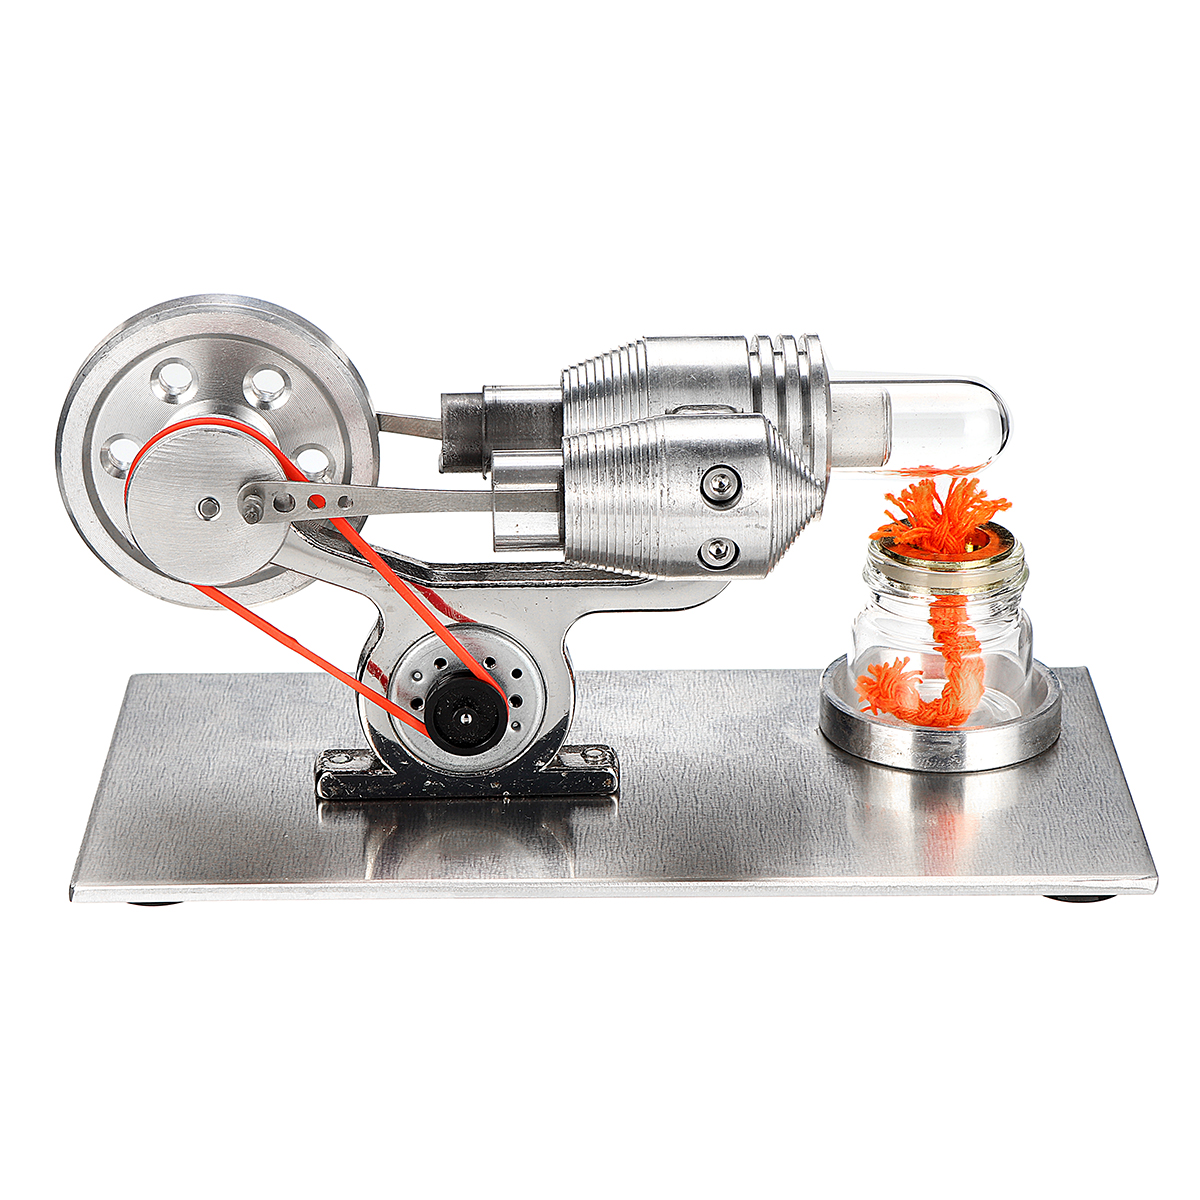 STEM Stainless Mini Hot Air Stirling Engine Motor Model Educational Toy Kit 12